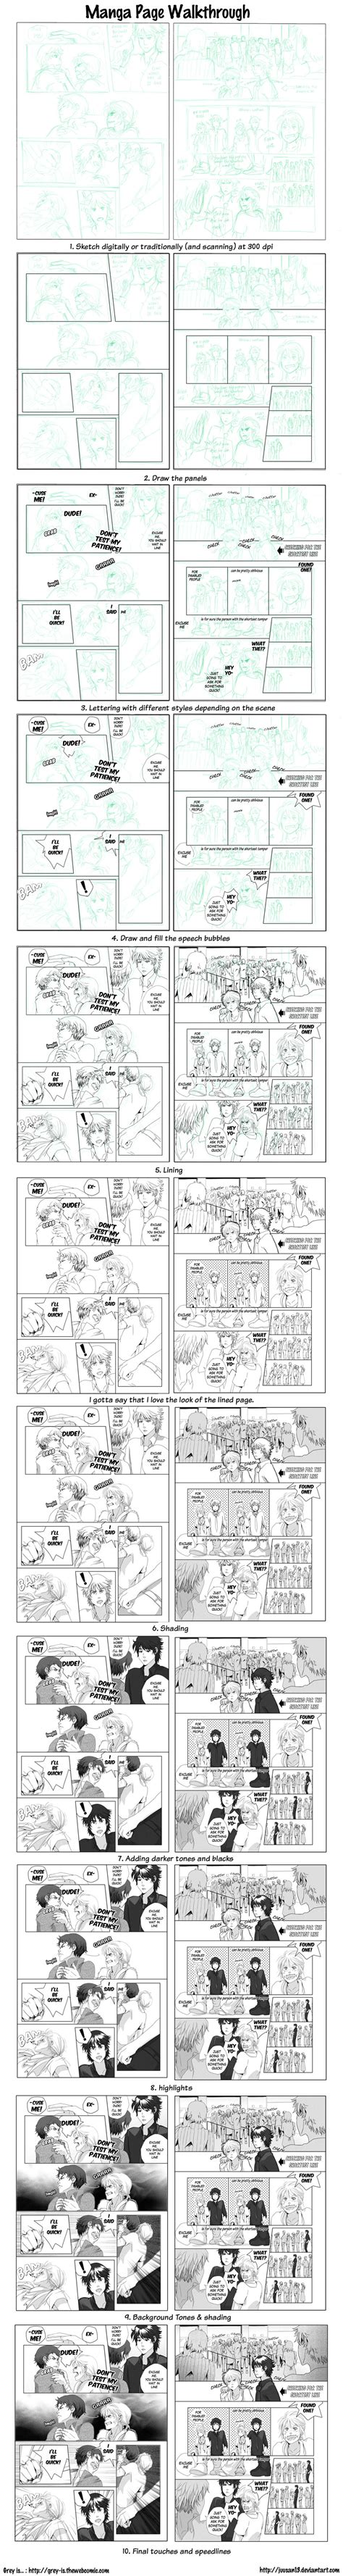 Manga Page Process By Deejuusan On Deviantart Comic Tutorial Manga Drawing Tutorials Comic